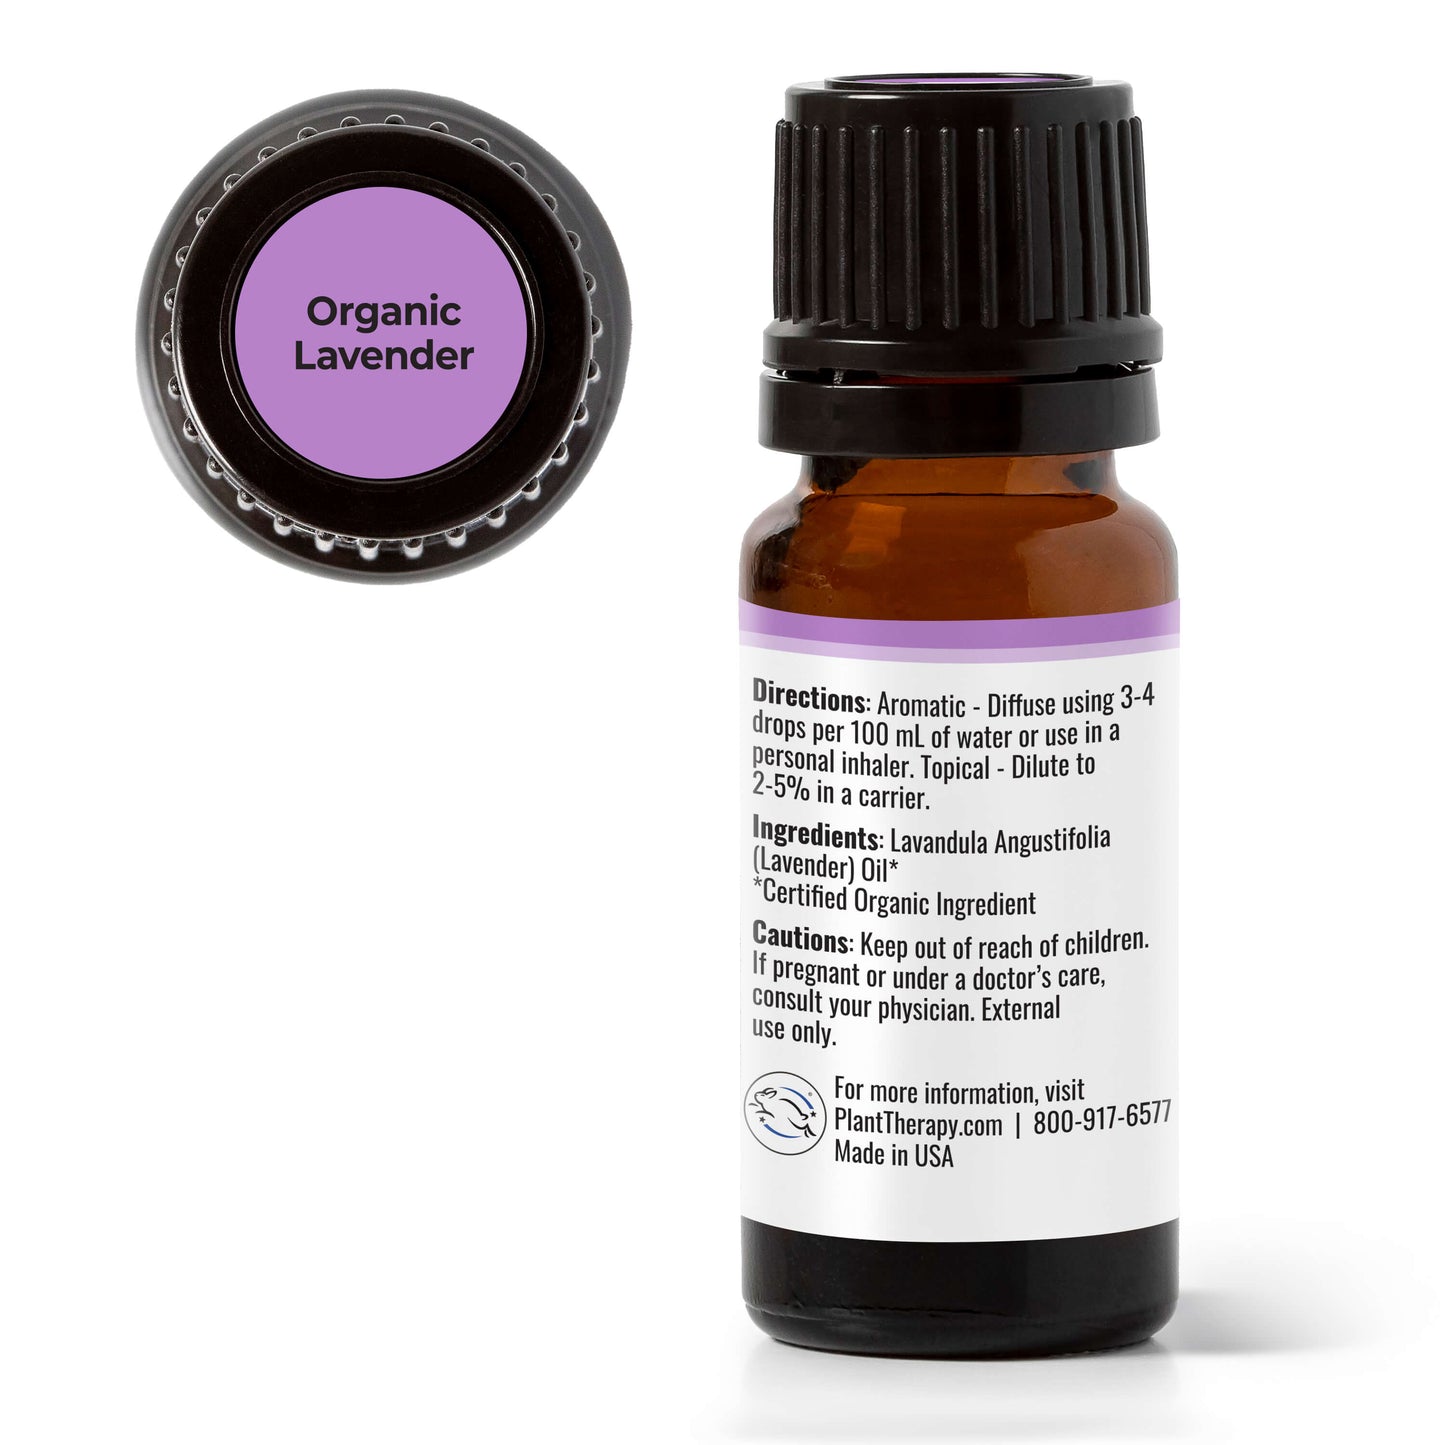 Organic Lavender Essential Oil back label